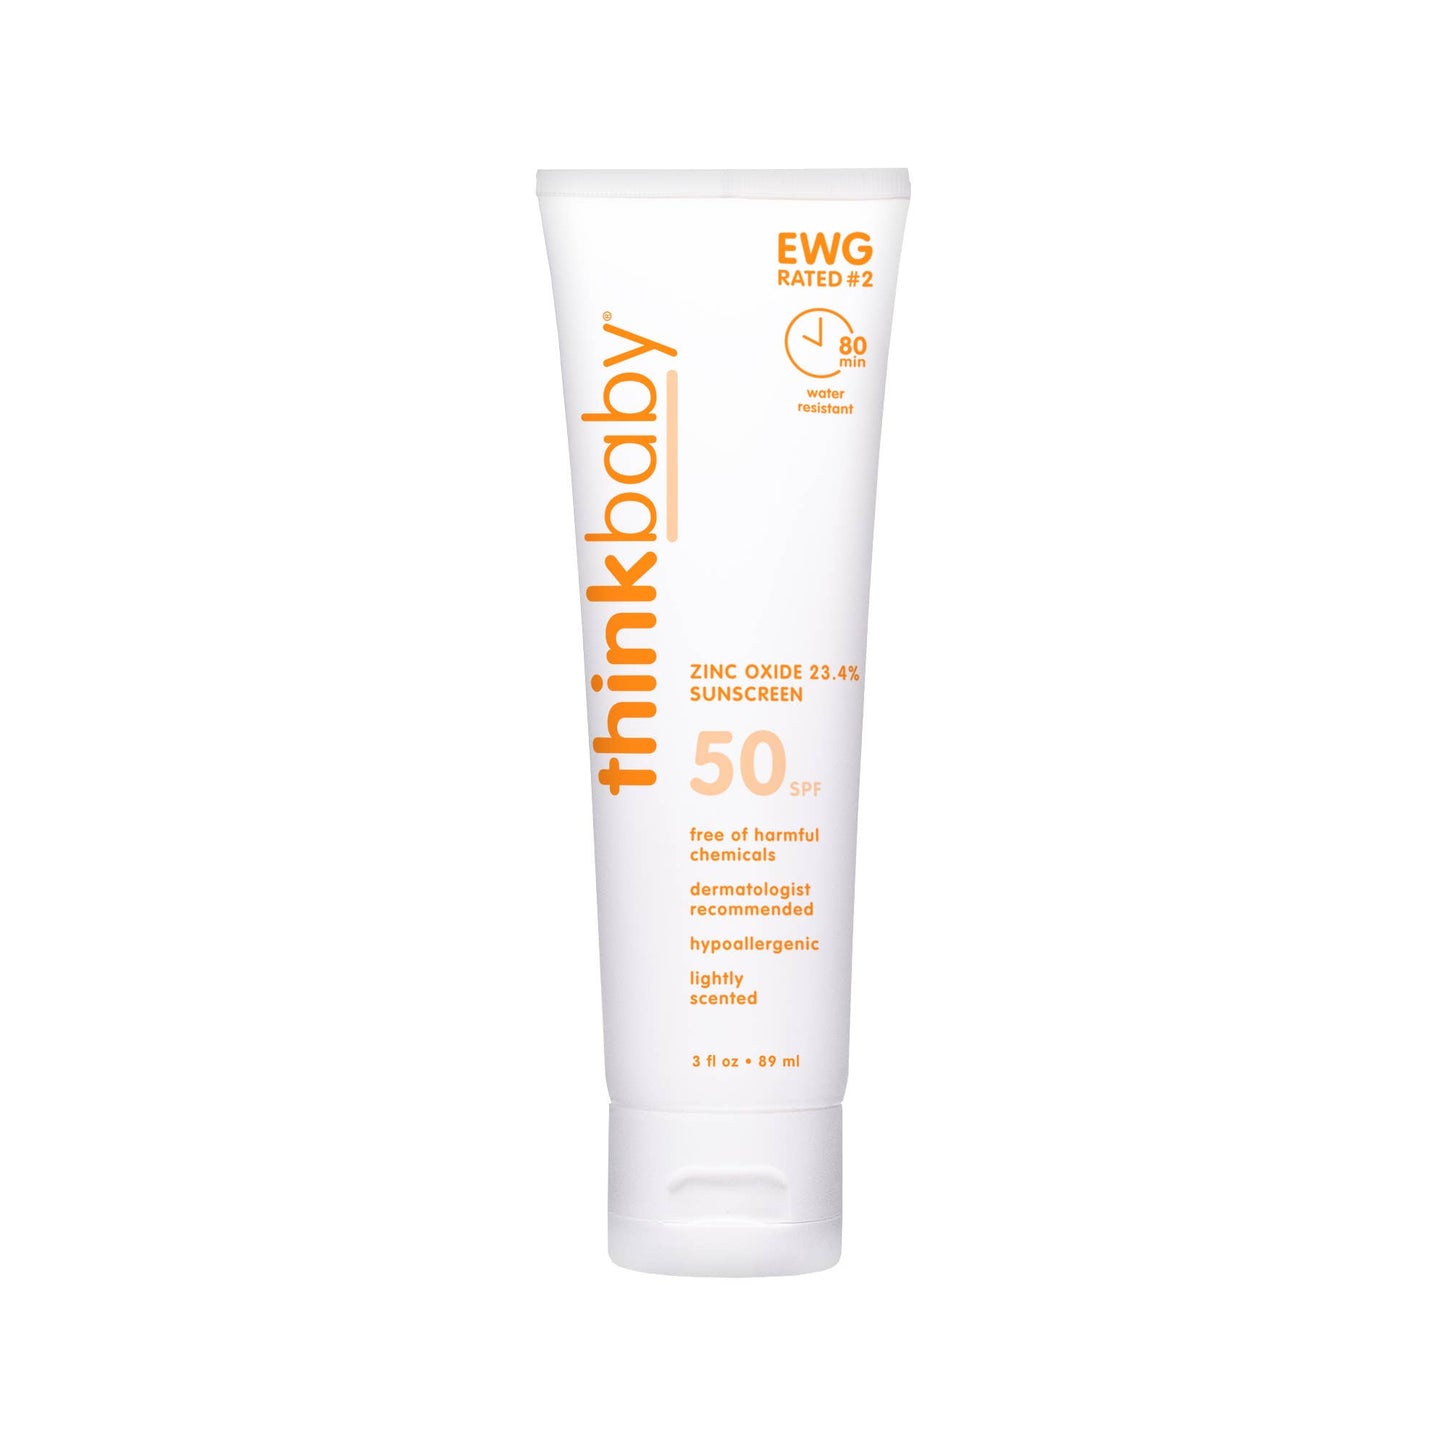 Thinkbaby Safe Sunscreen Spf 50+: 6oz